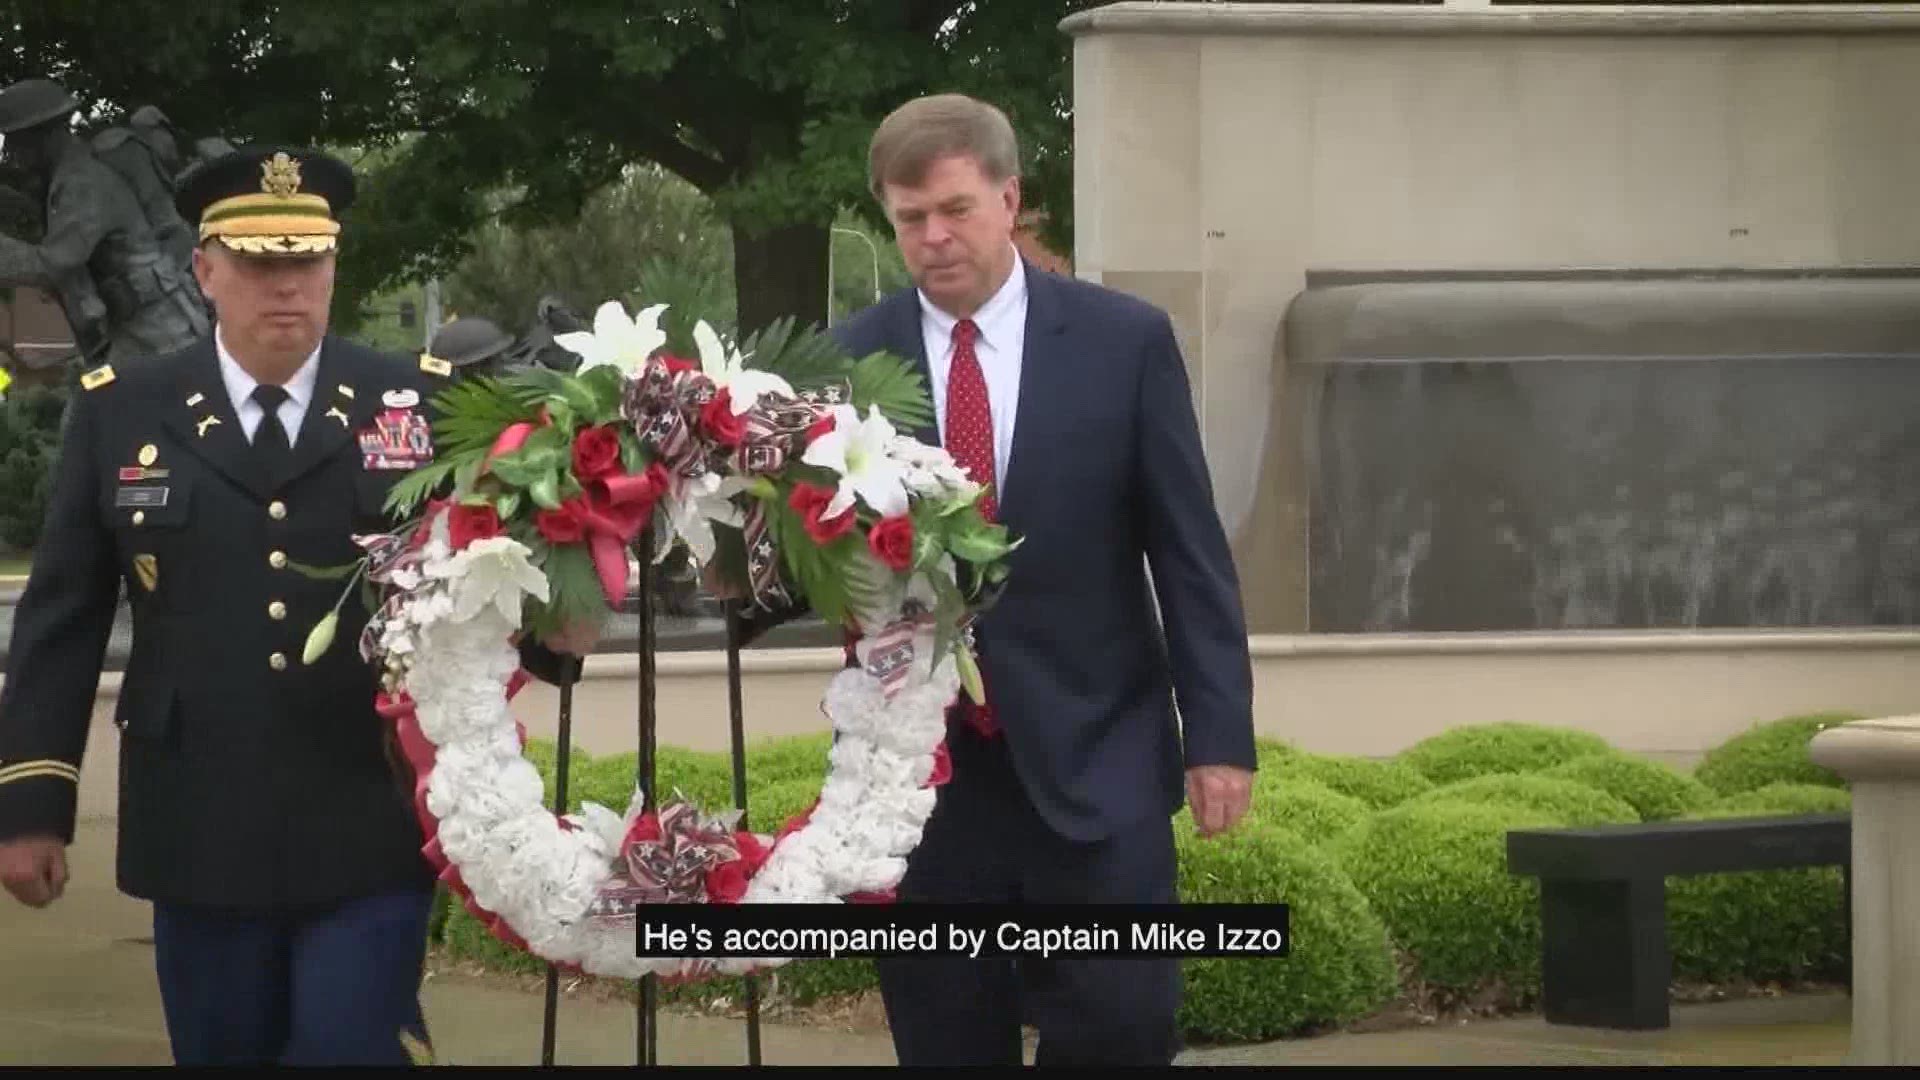 Local leaders honored fallen soldiers at the Huntsville Veterans Memorial.